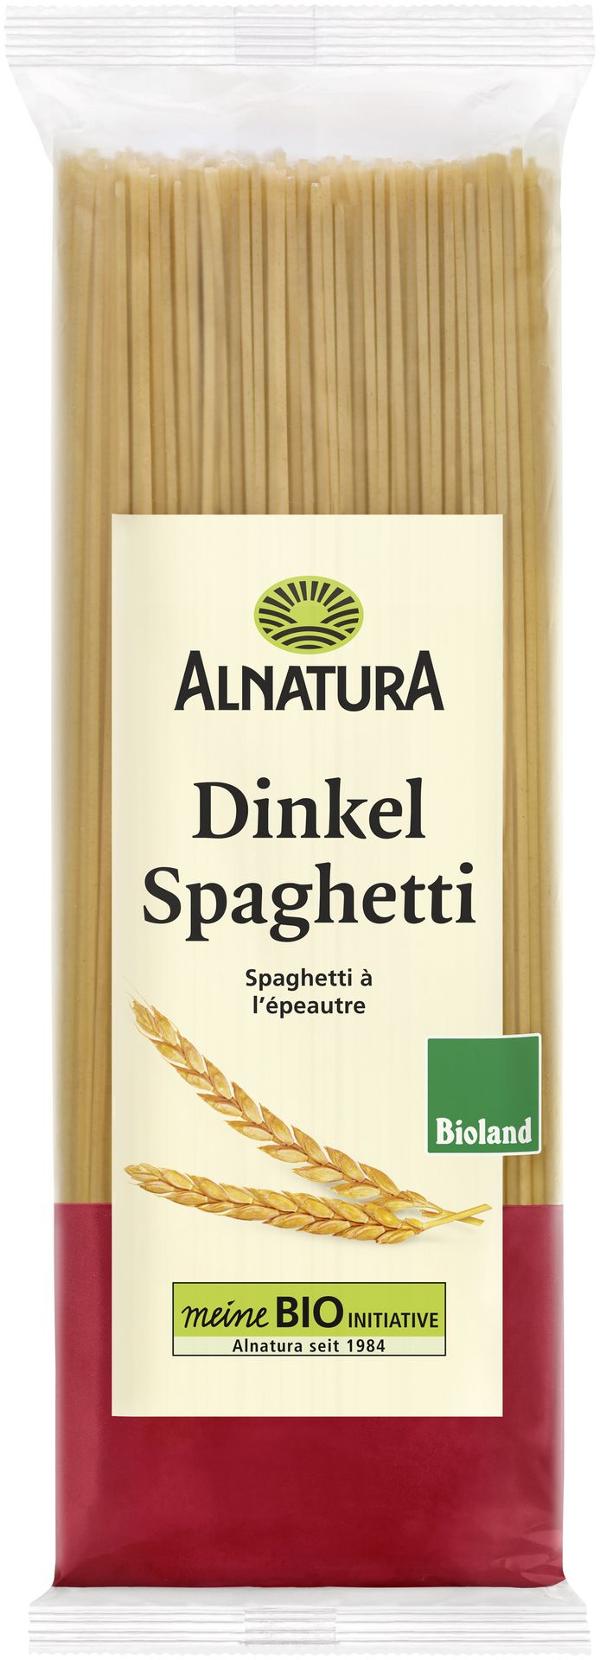 Produktfoto zu Dinkel Spaghetti 500g Alnatura